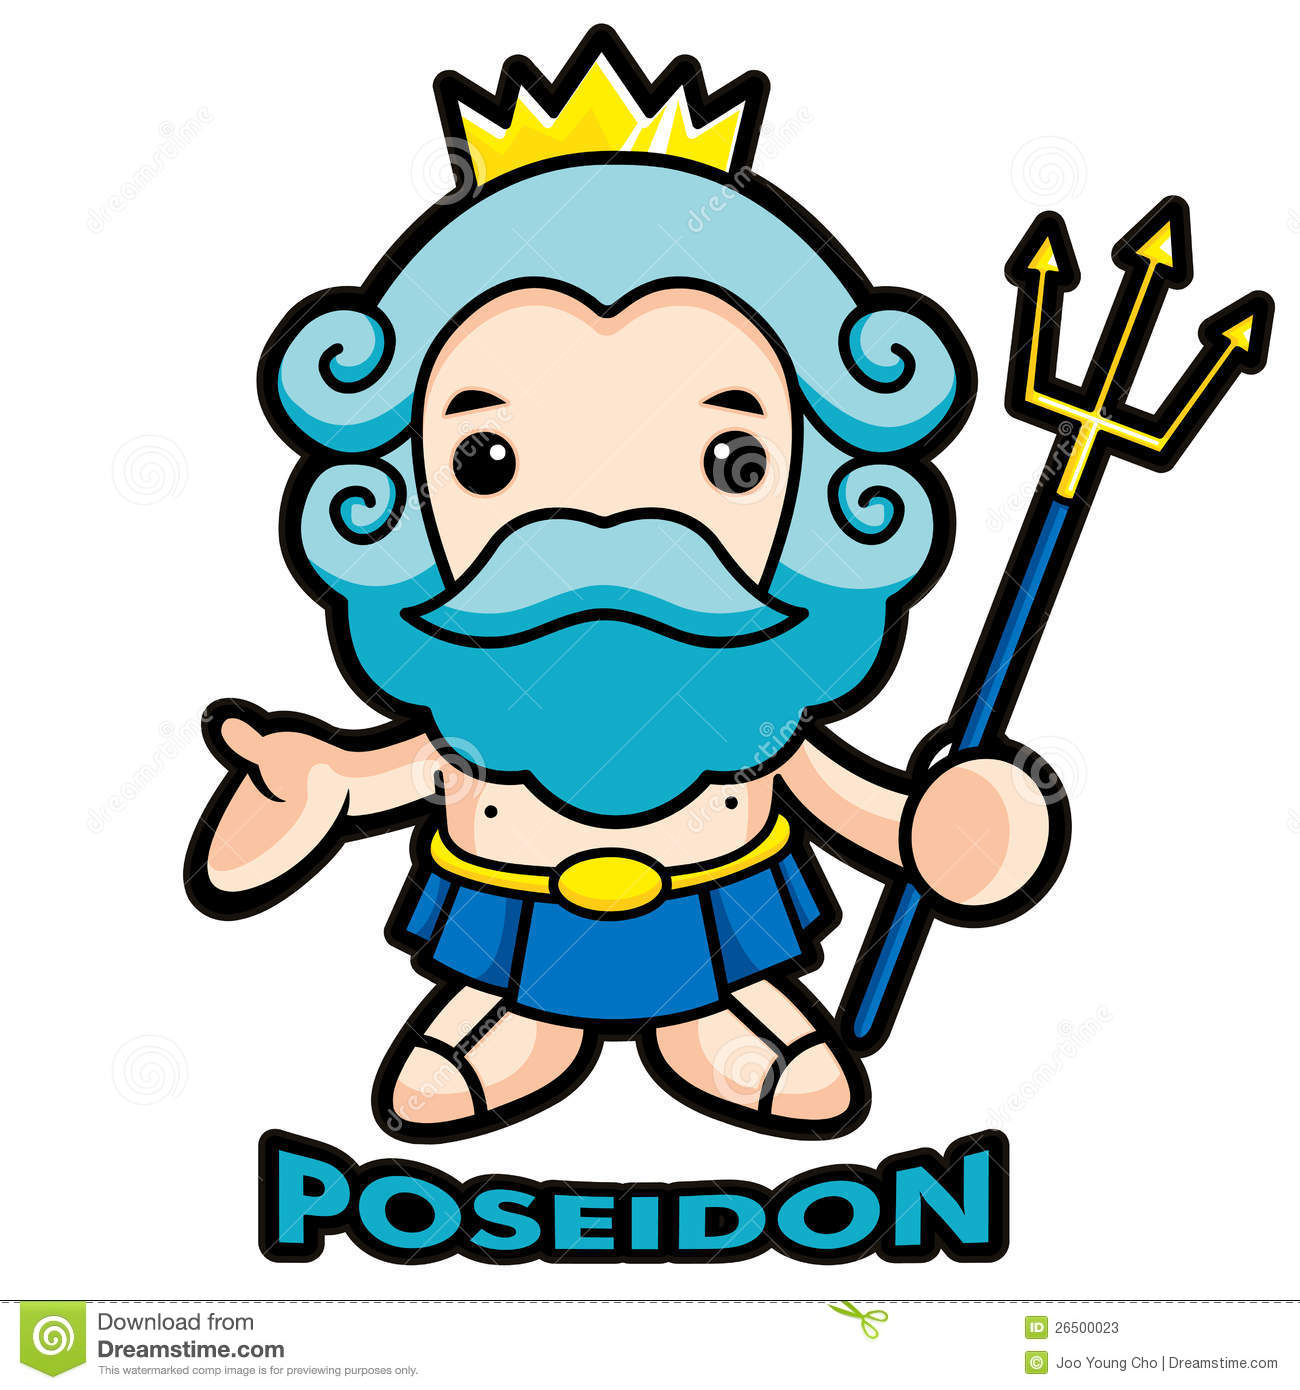 Collection of Poseidon clipart.